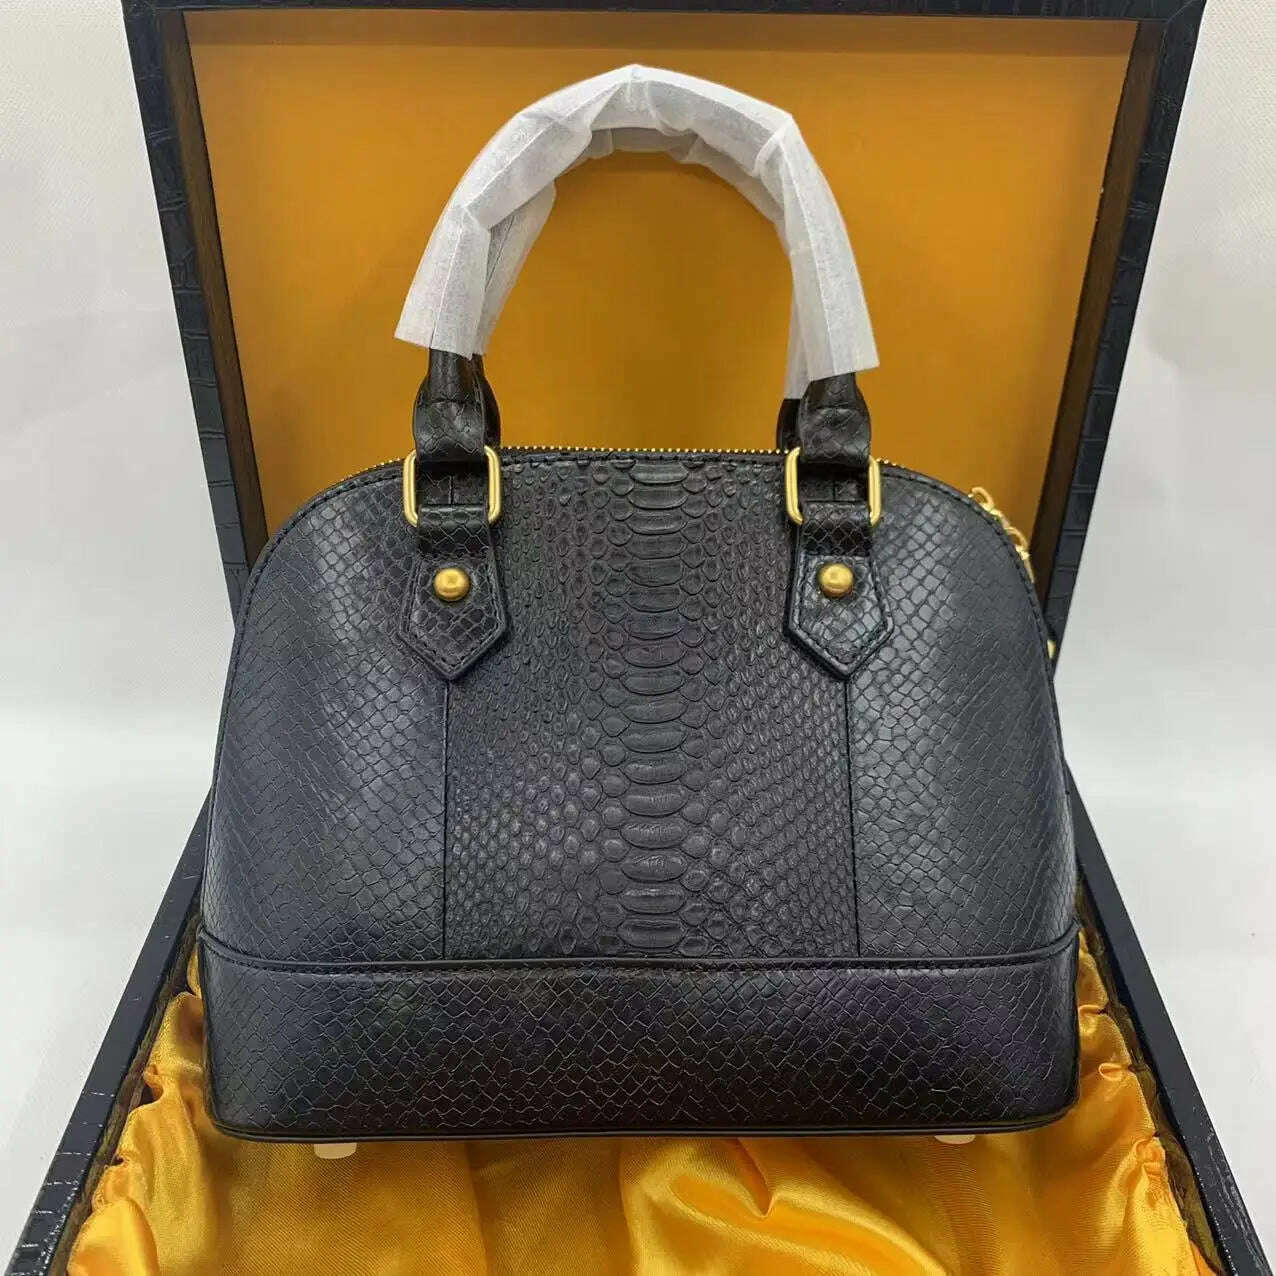 KIMLUD, Luxury Brand Women's Bag Noble Snake Shell Bag European And American Fashion Personalized Bag Famous Designer Handbag For Women, KIMLUD Women's Clothes